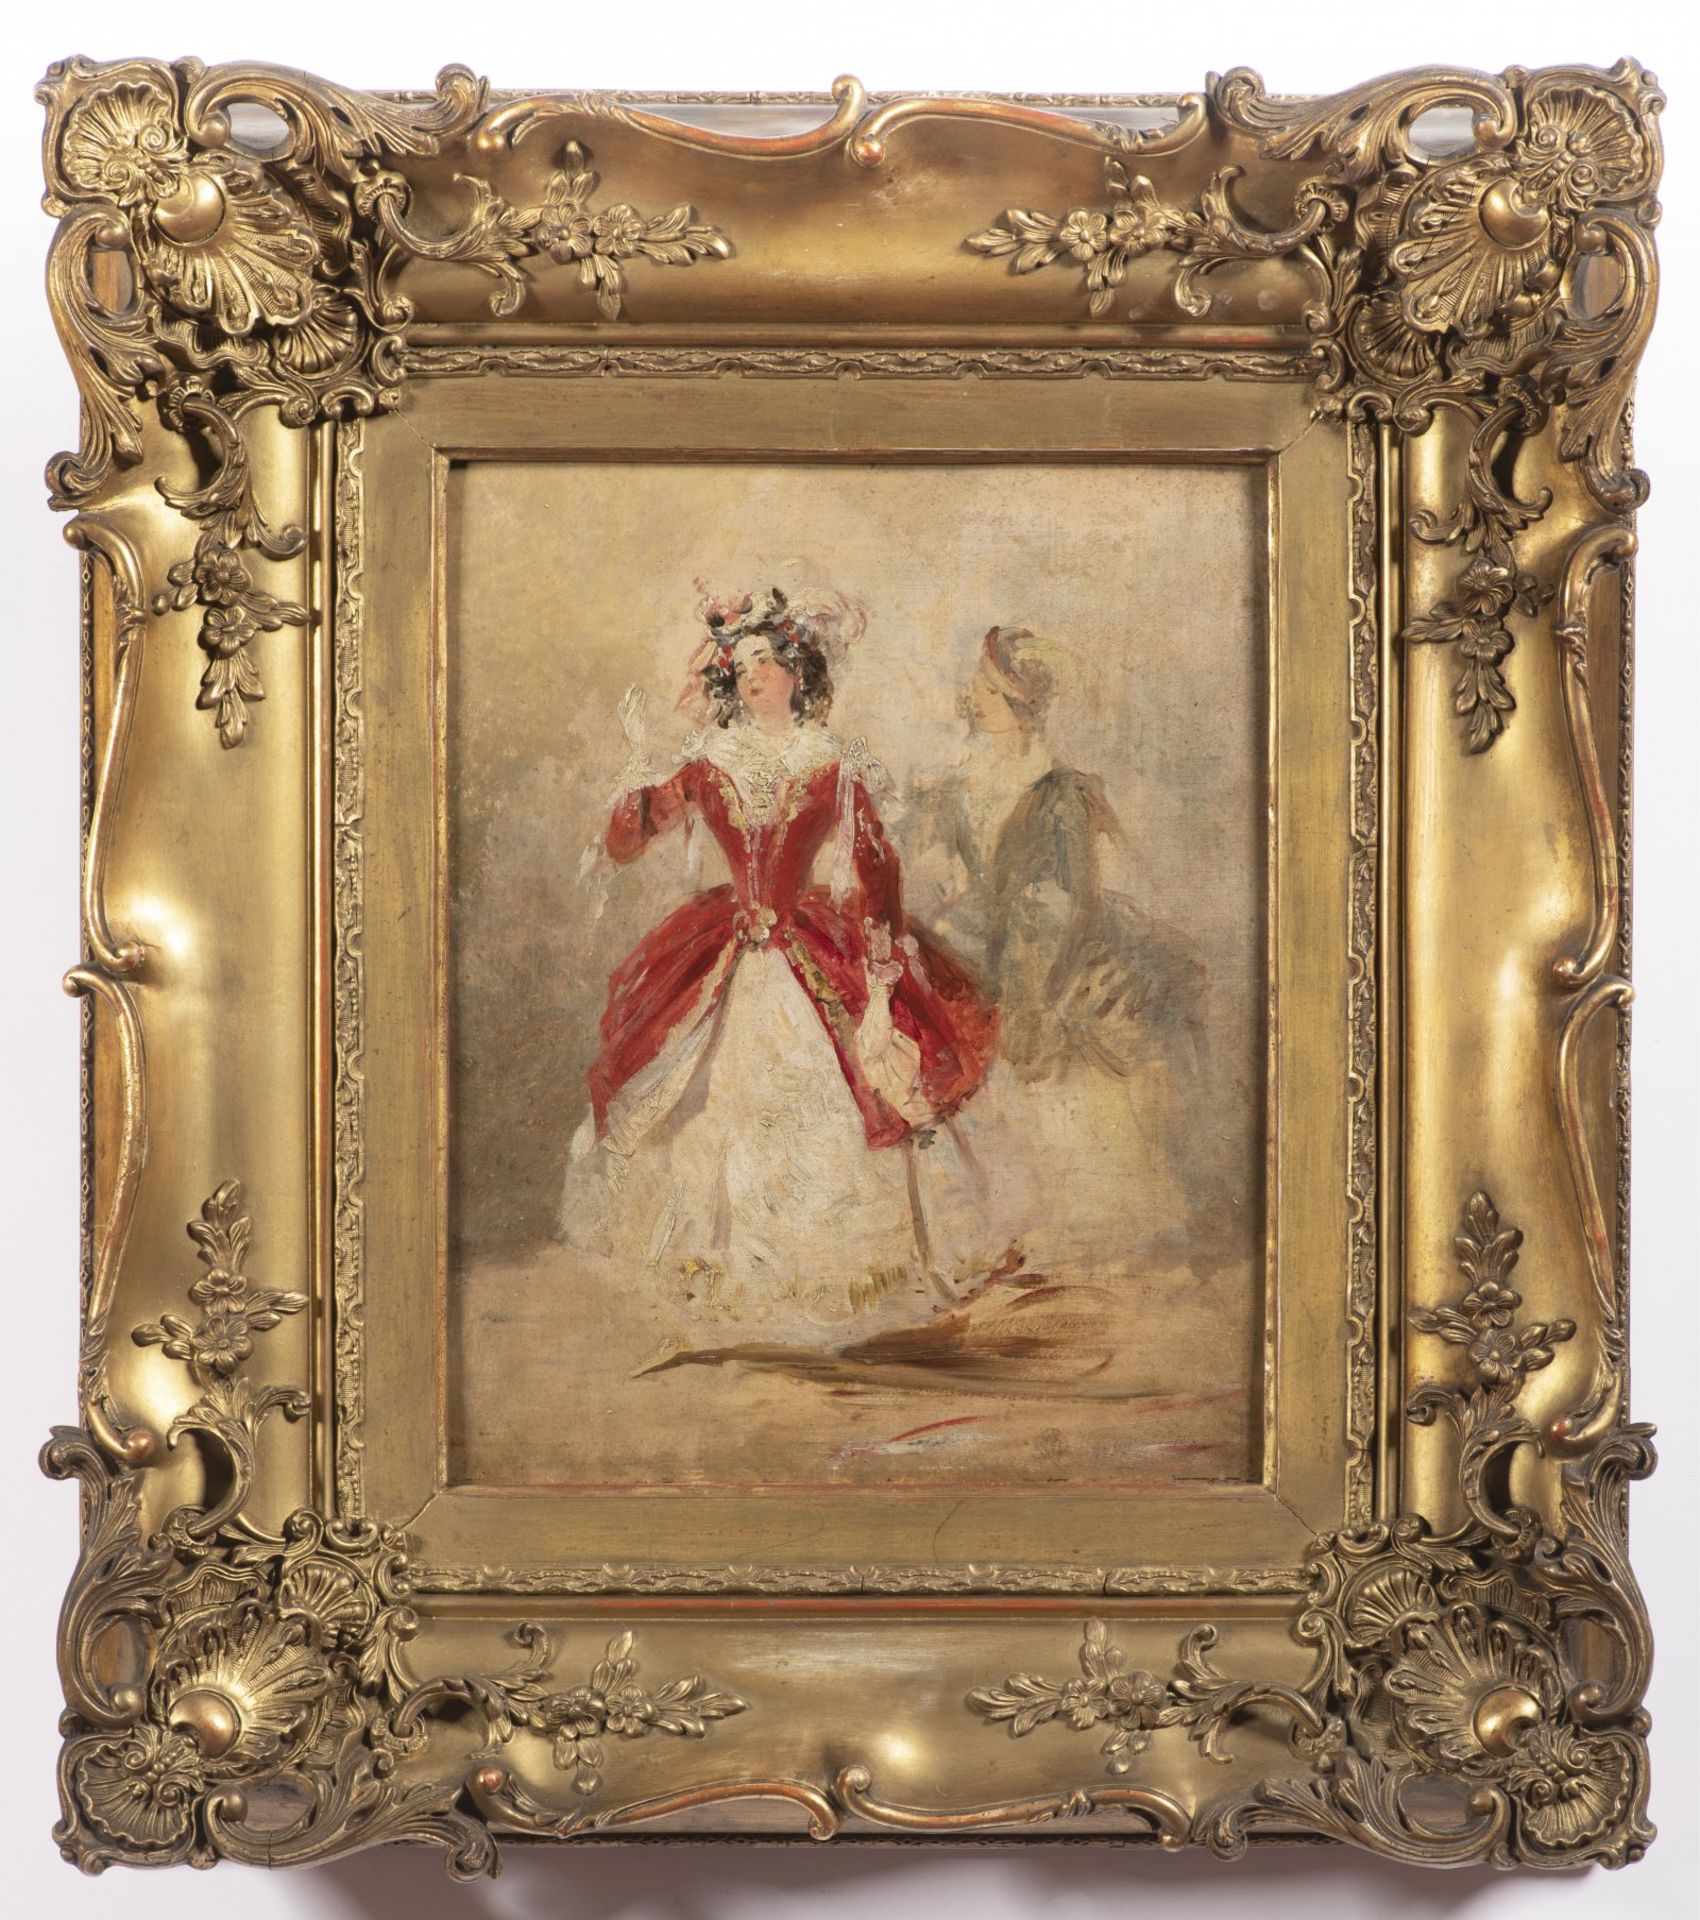 JOSEF NAVRÁTIL 1798 - 1865: TWO ACTRESSES Ca. 1850 Oil on cardboard 34 x 27 cm Josef Matěj